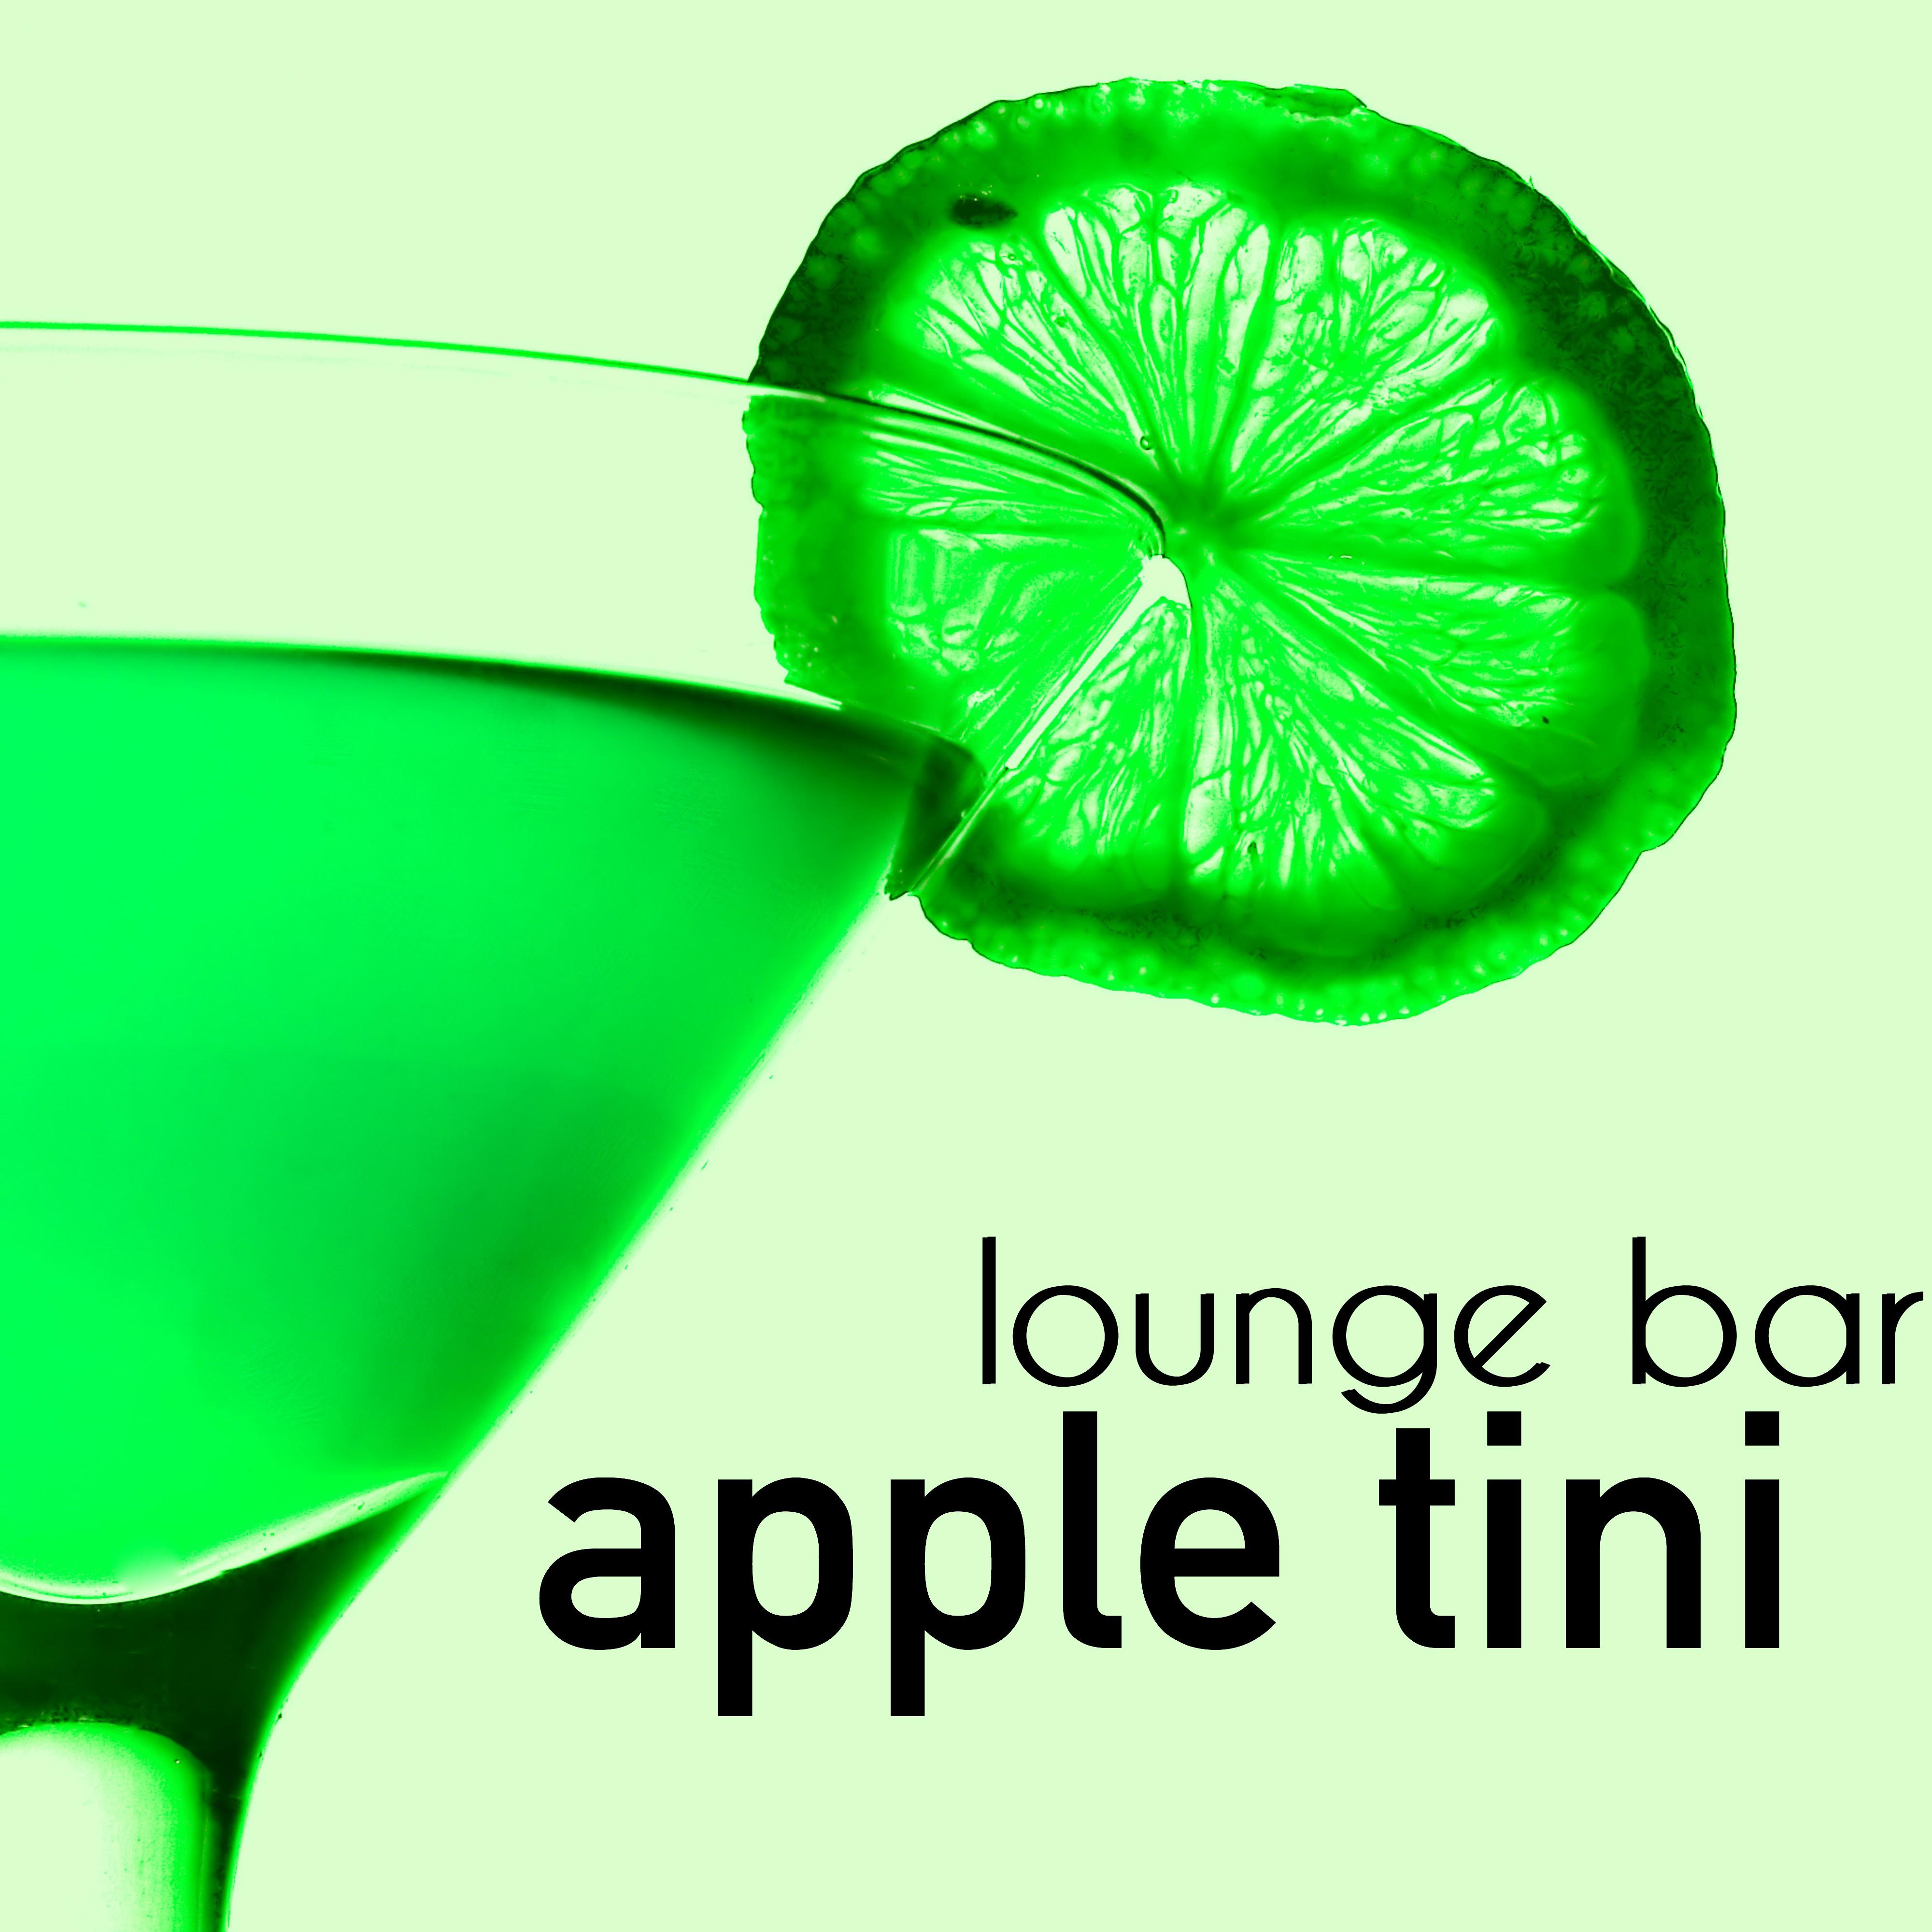 Drinking Alone - Classy Bar Background